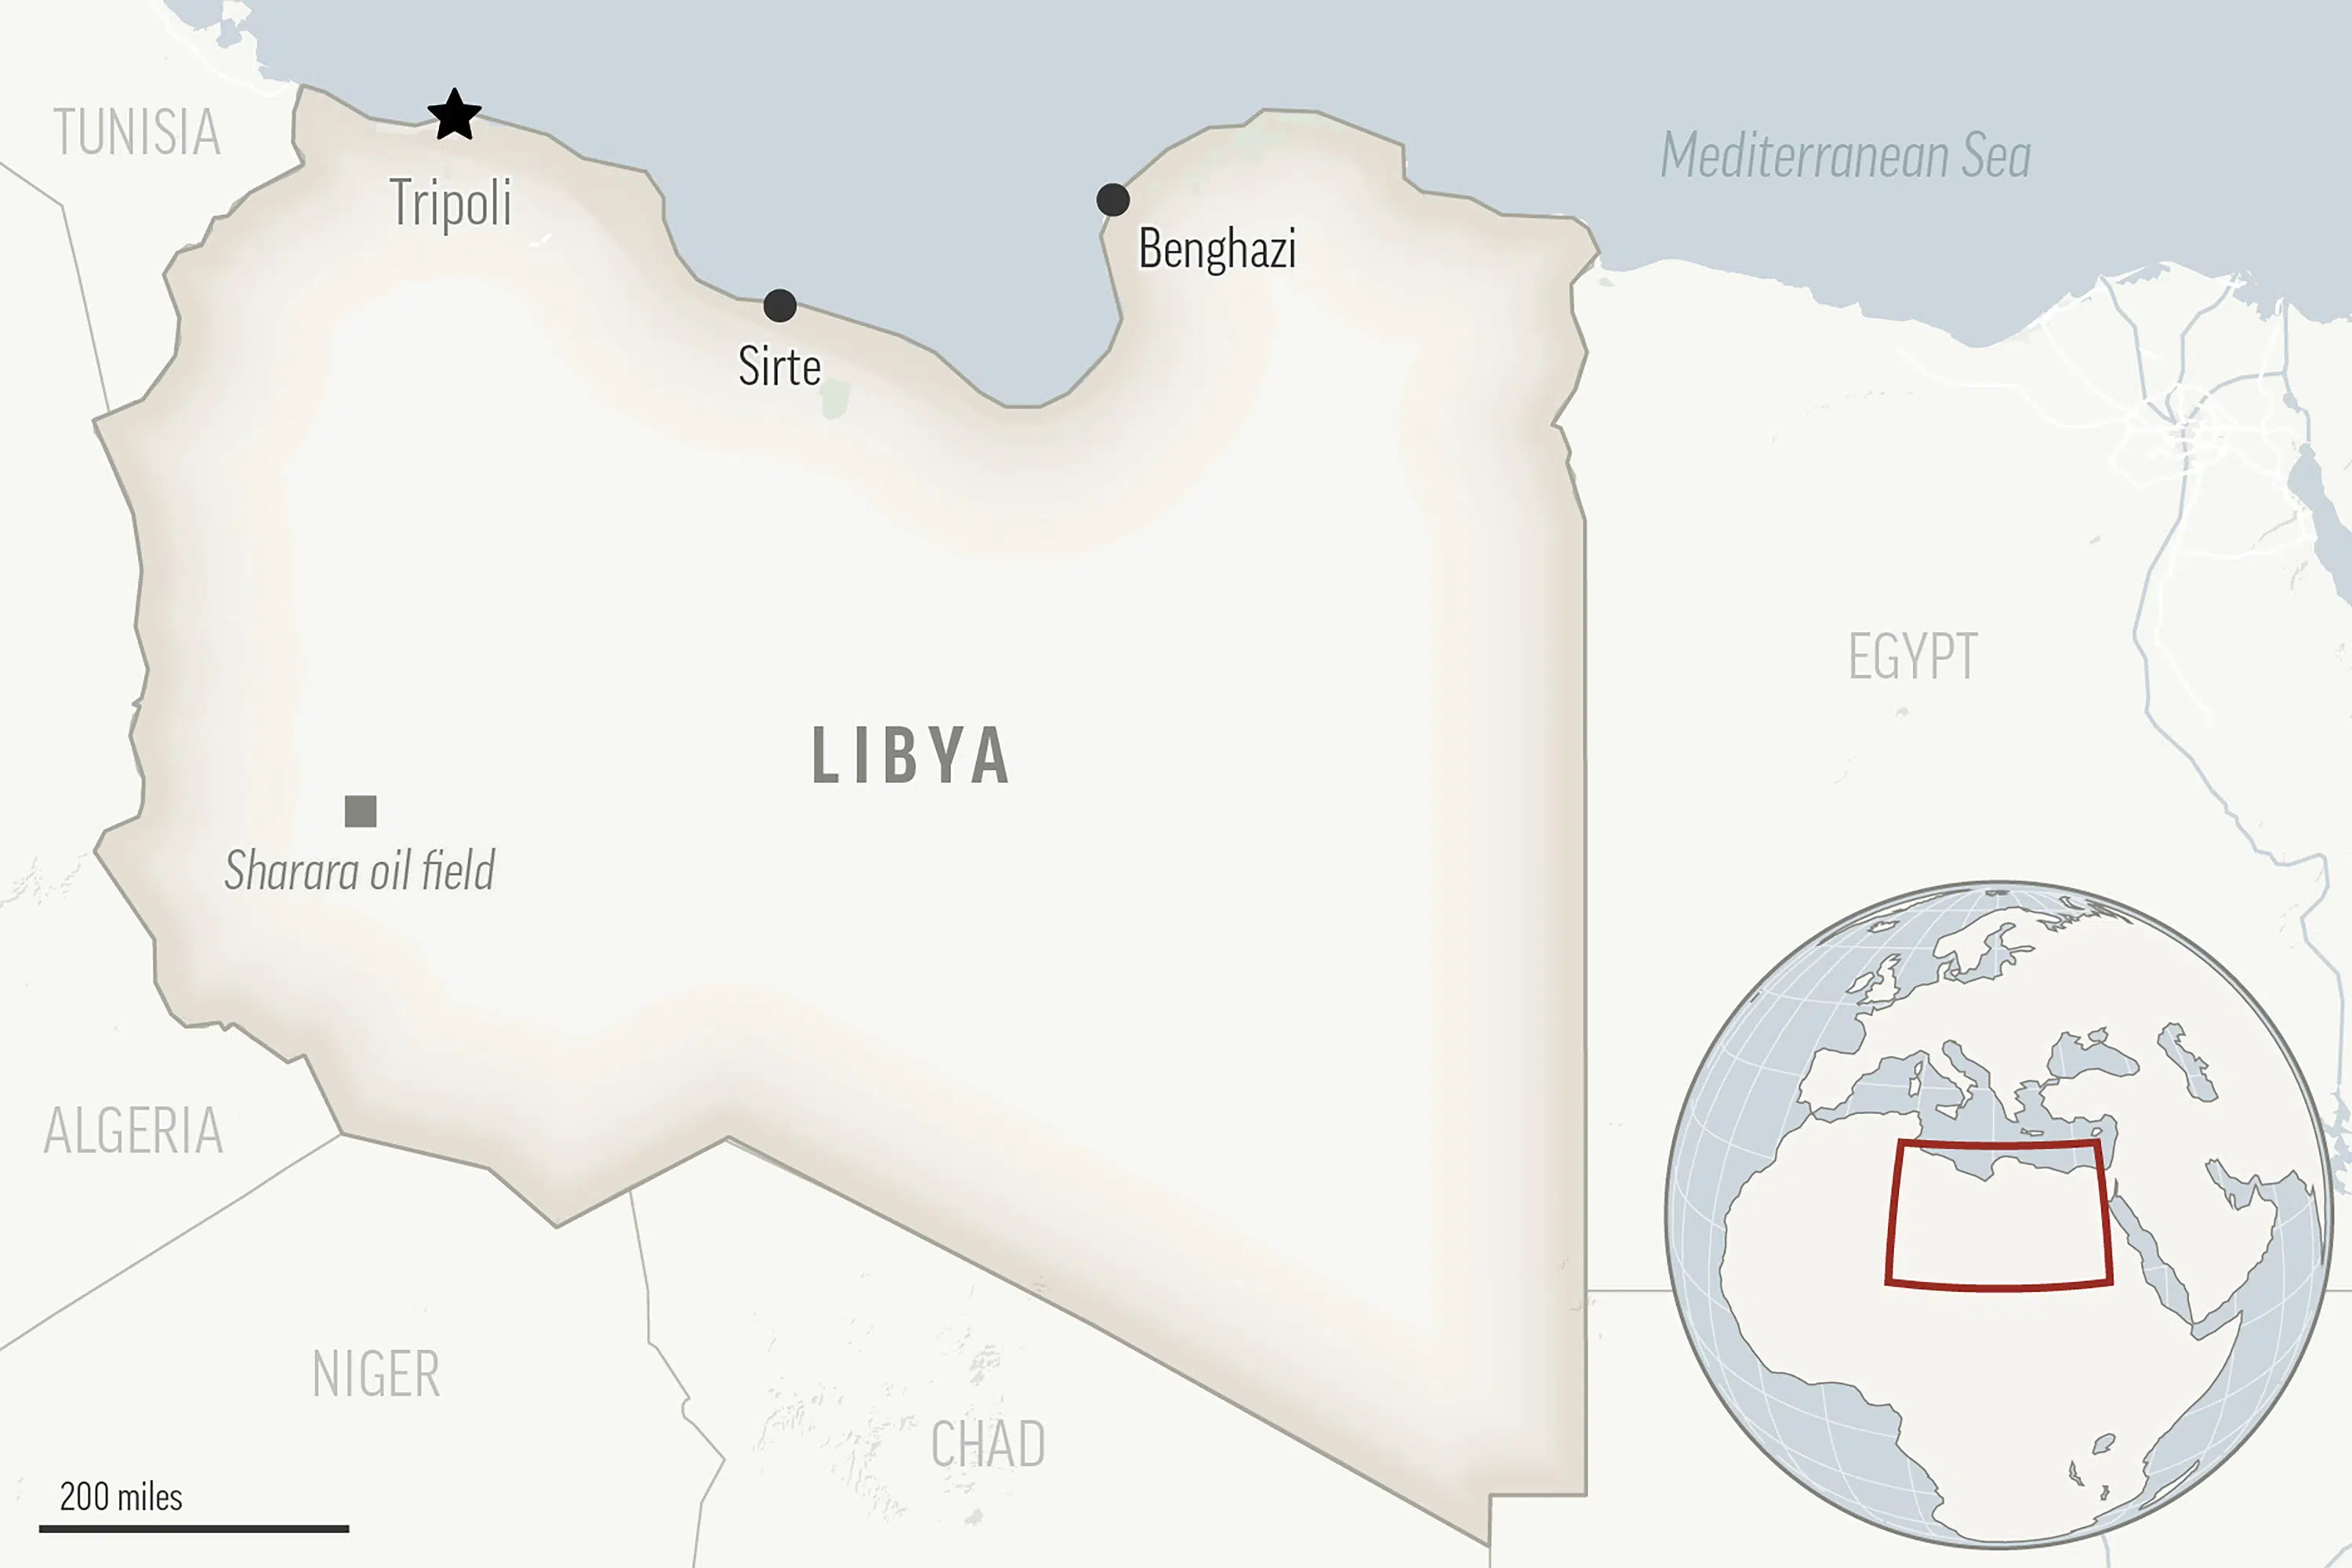 UN nuclear watchdog: 2.5 tons of uranium missing in Libya